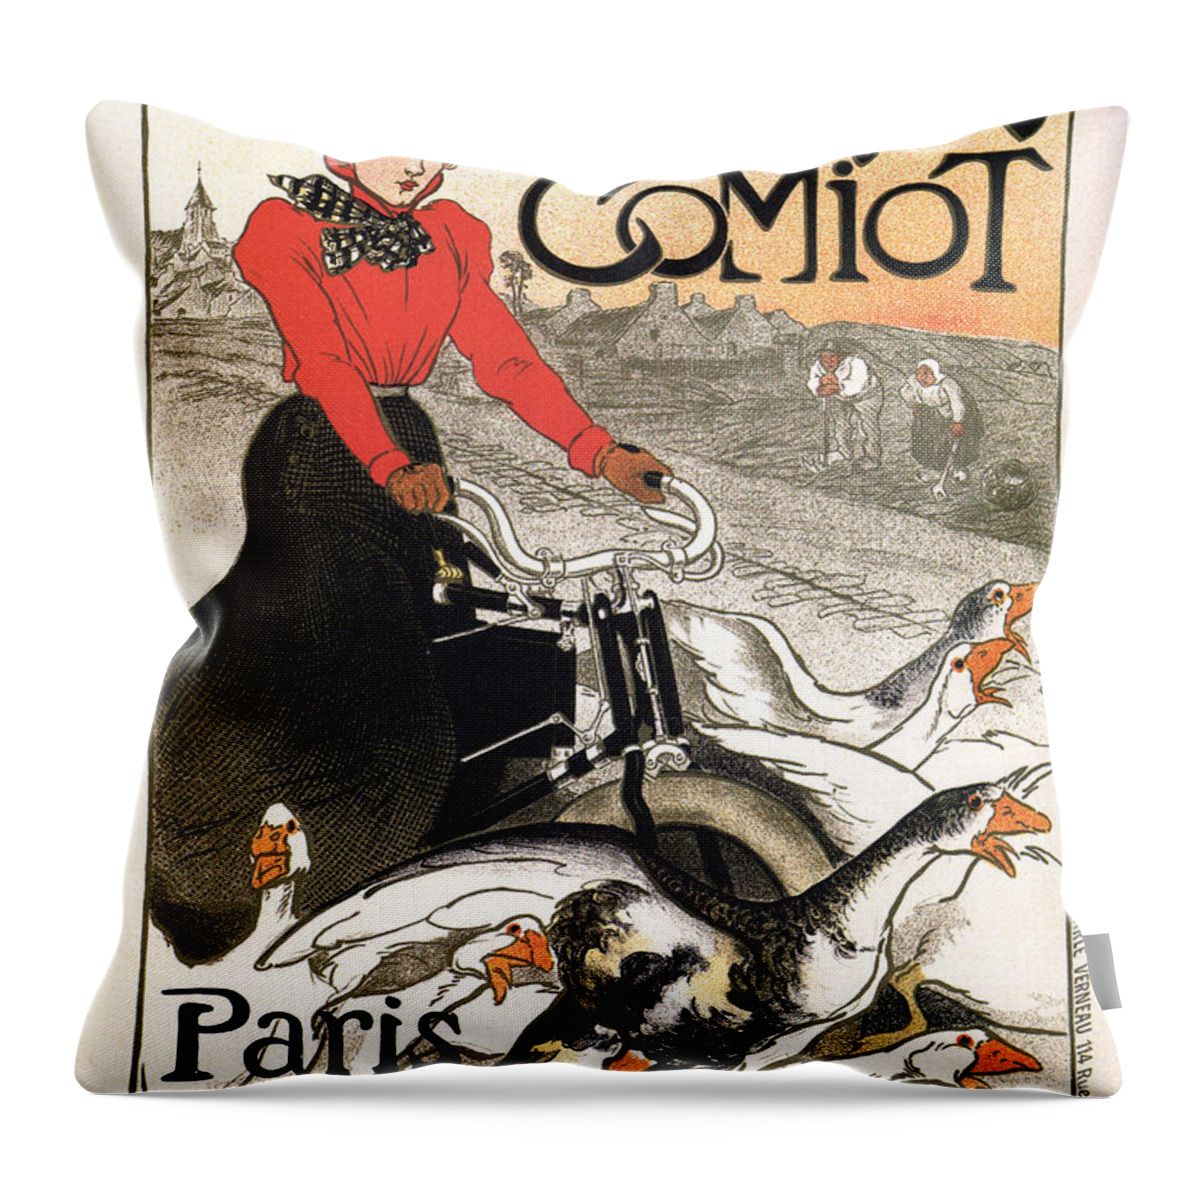 Vintage Throw Pillow featuring the mixed media Motocycles Comiot - Paris - Vintage Advertising Poster by Studio Grafiikka